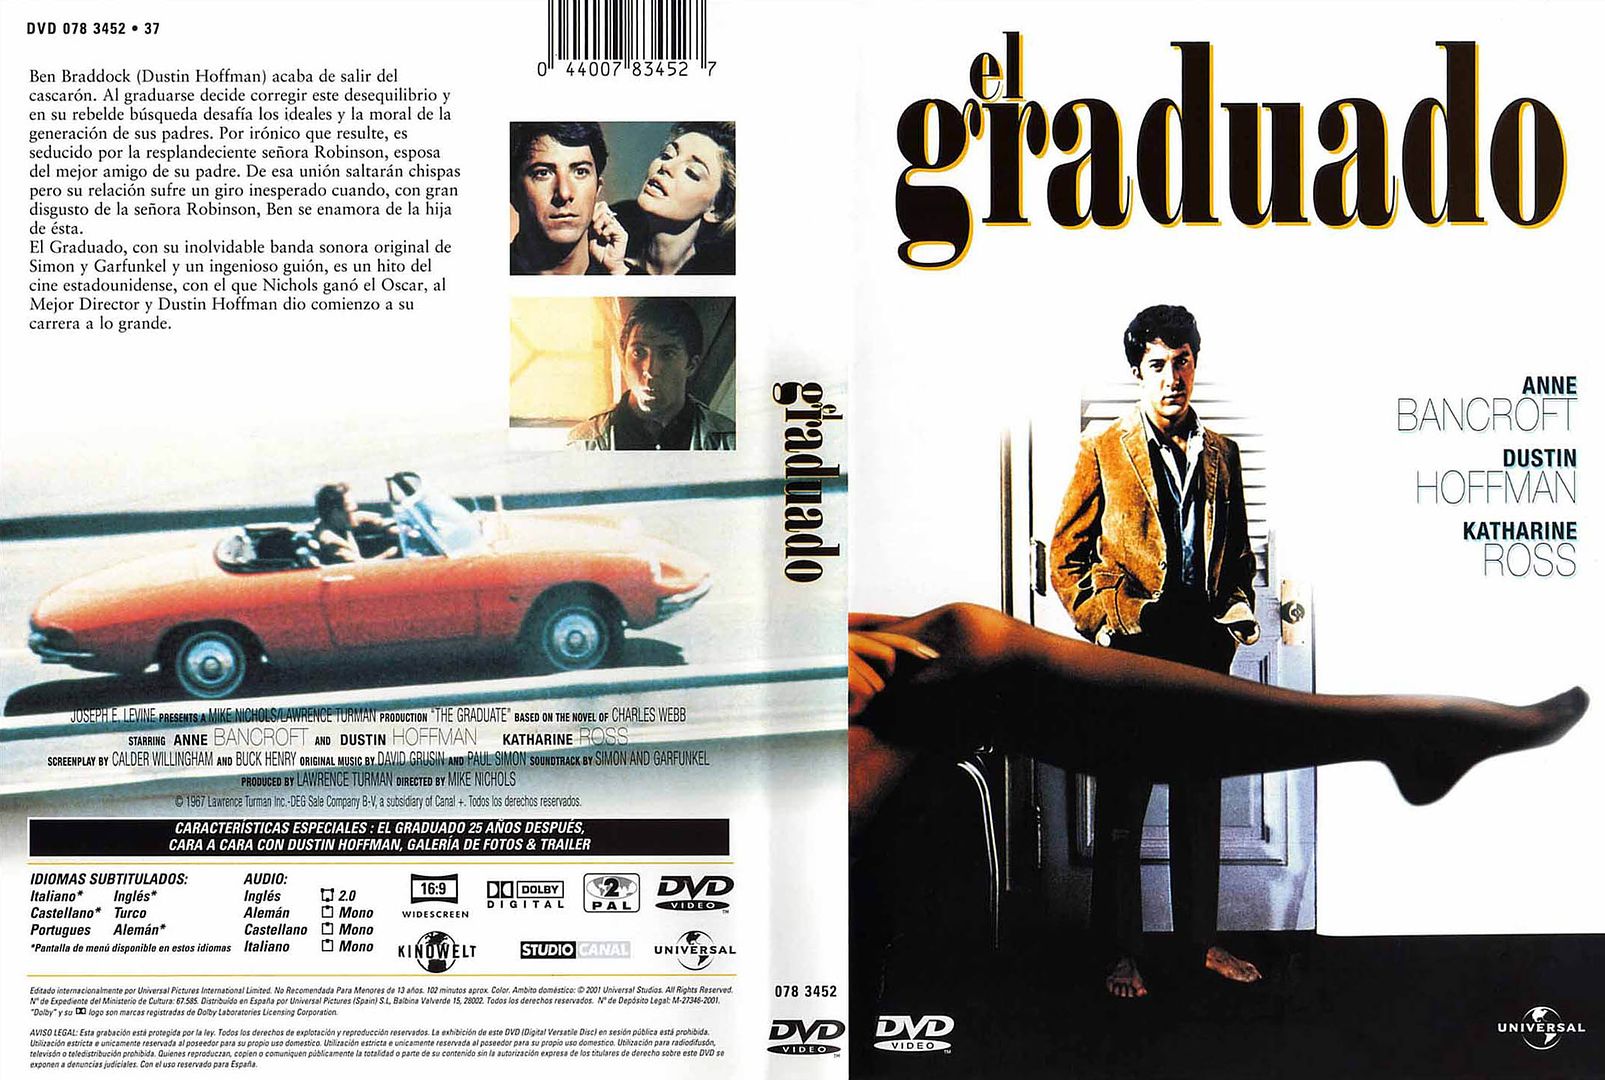 El Graduado Frontal DVD - El Graduado TvRip Español (1967) (Drama Romance)